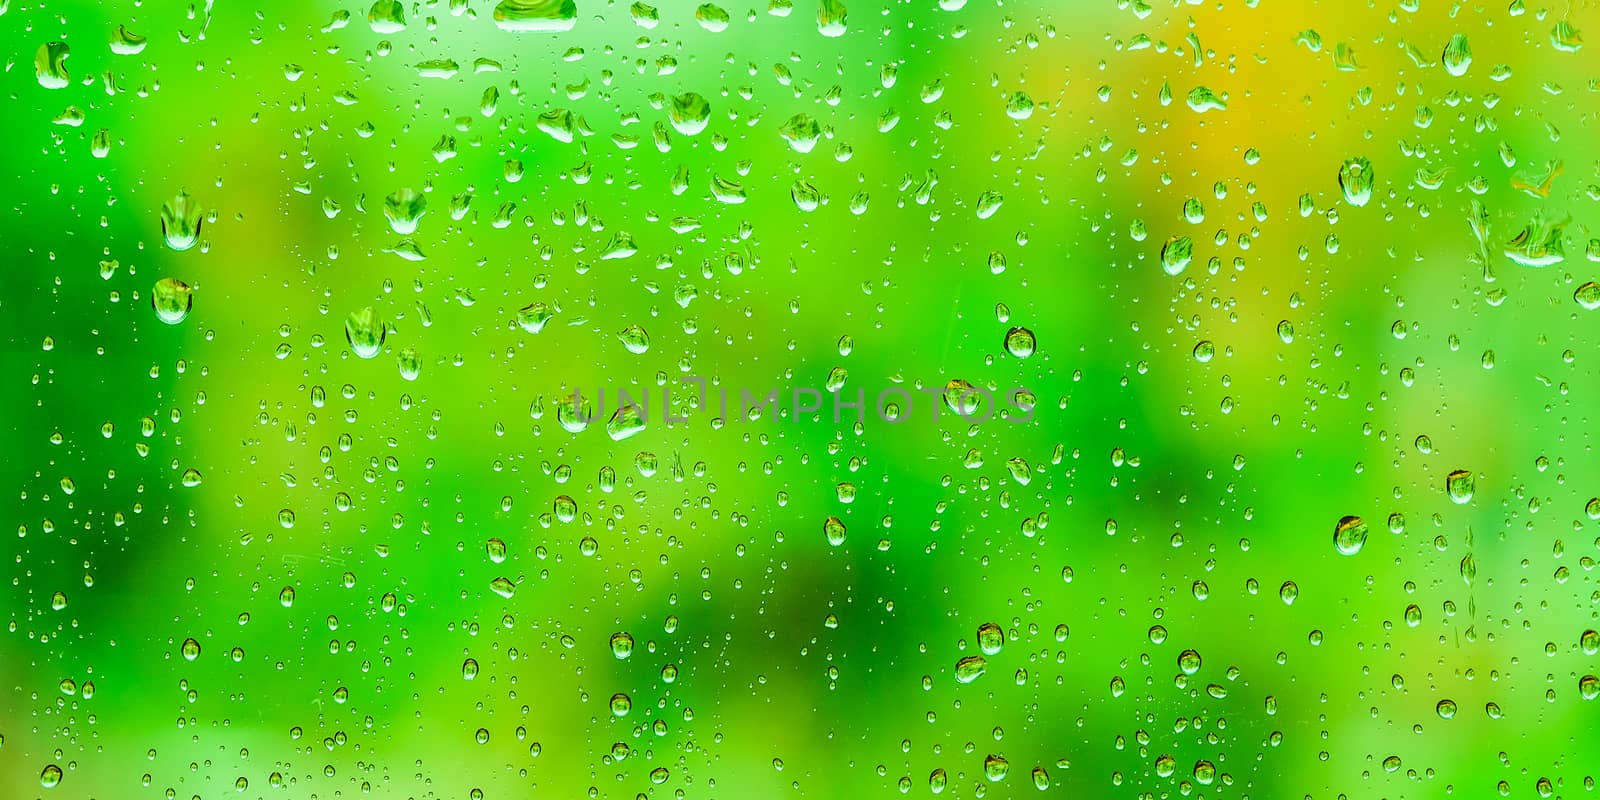 Water drops on green background by Surasak